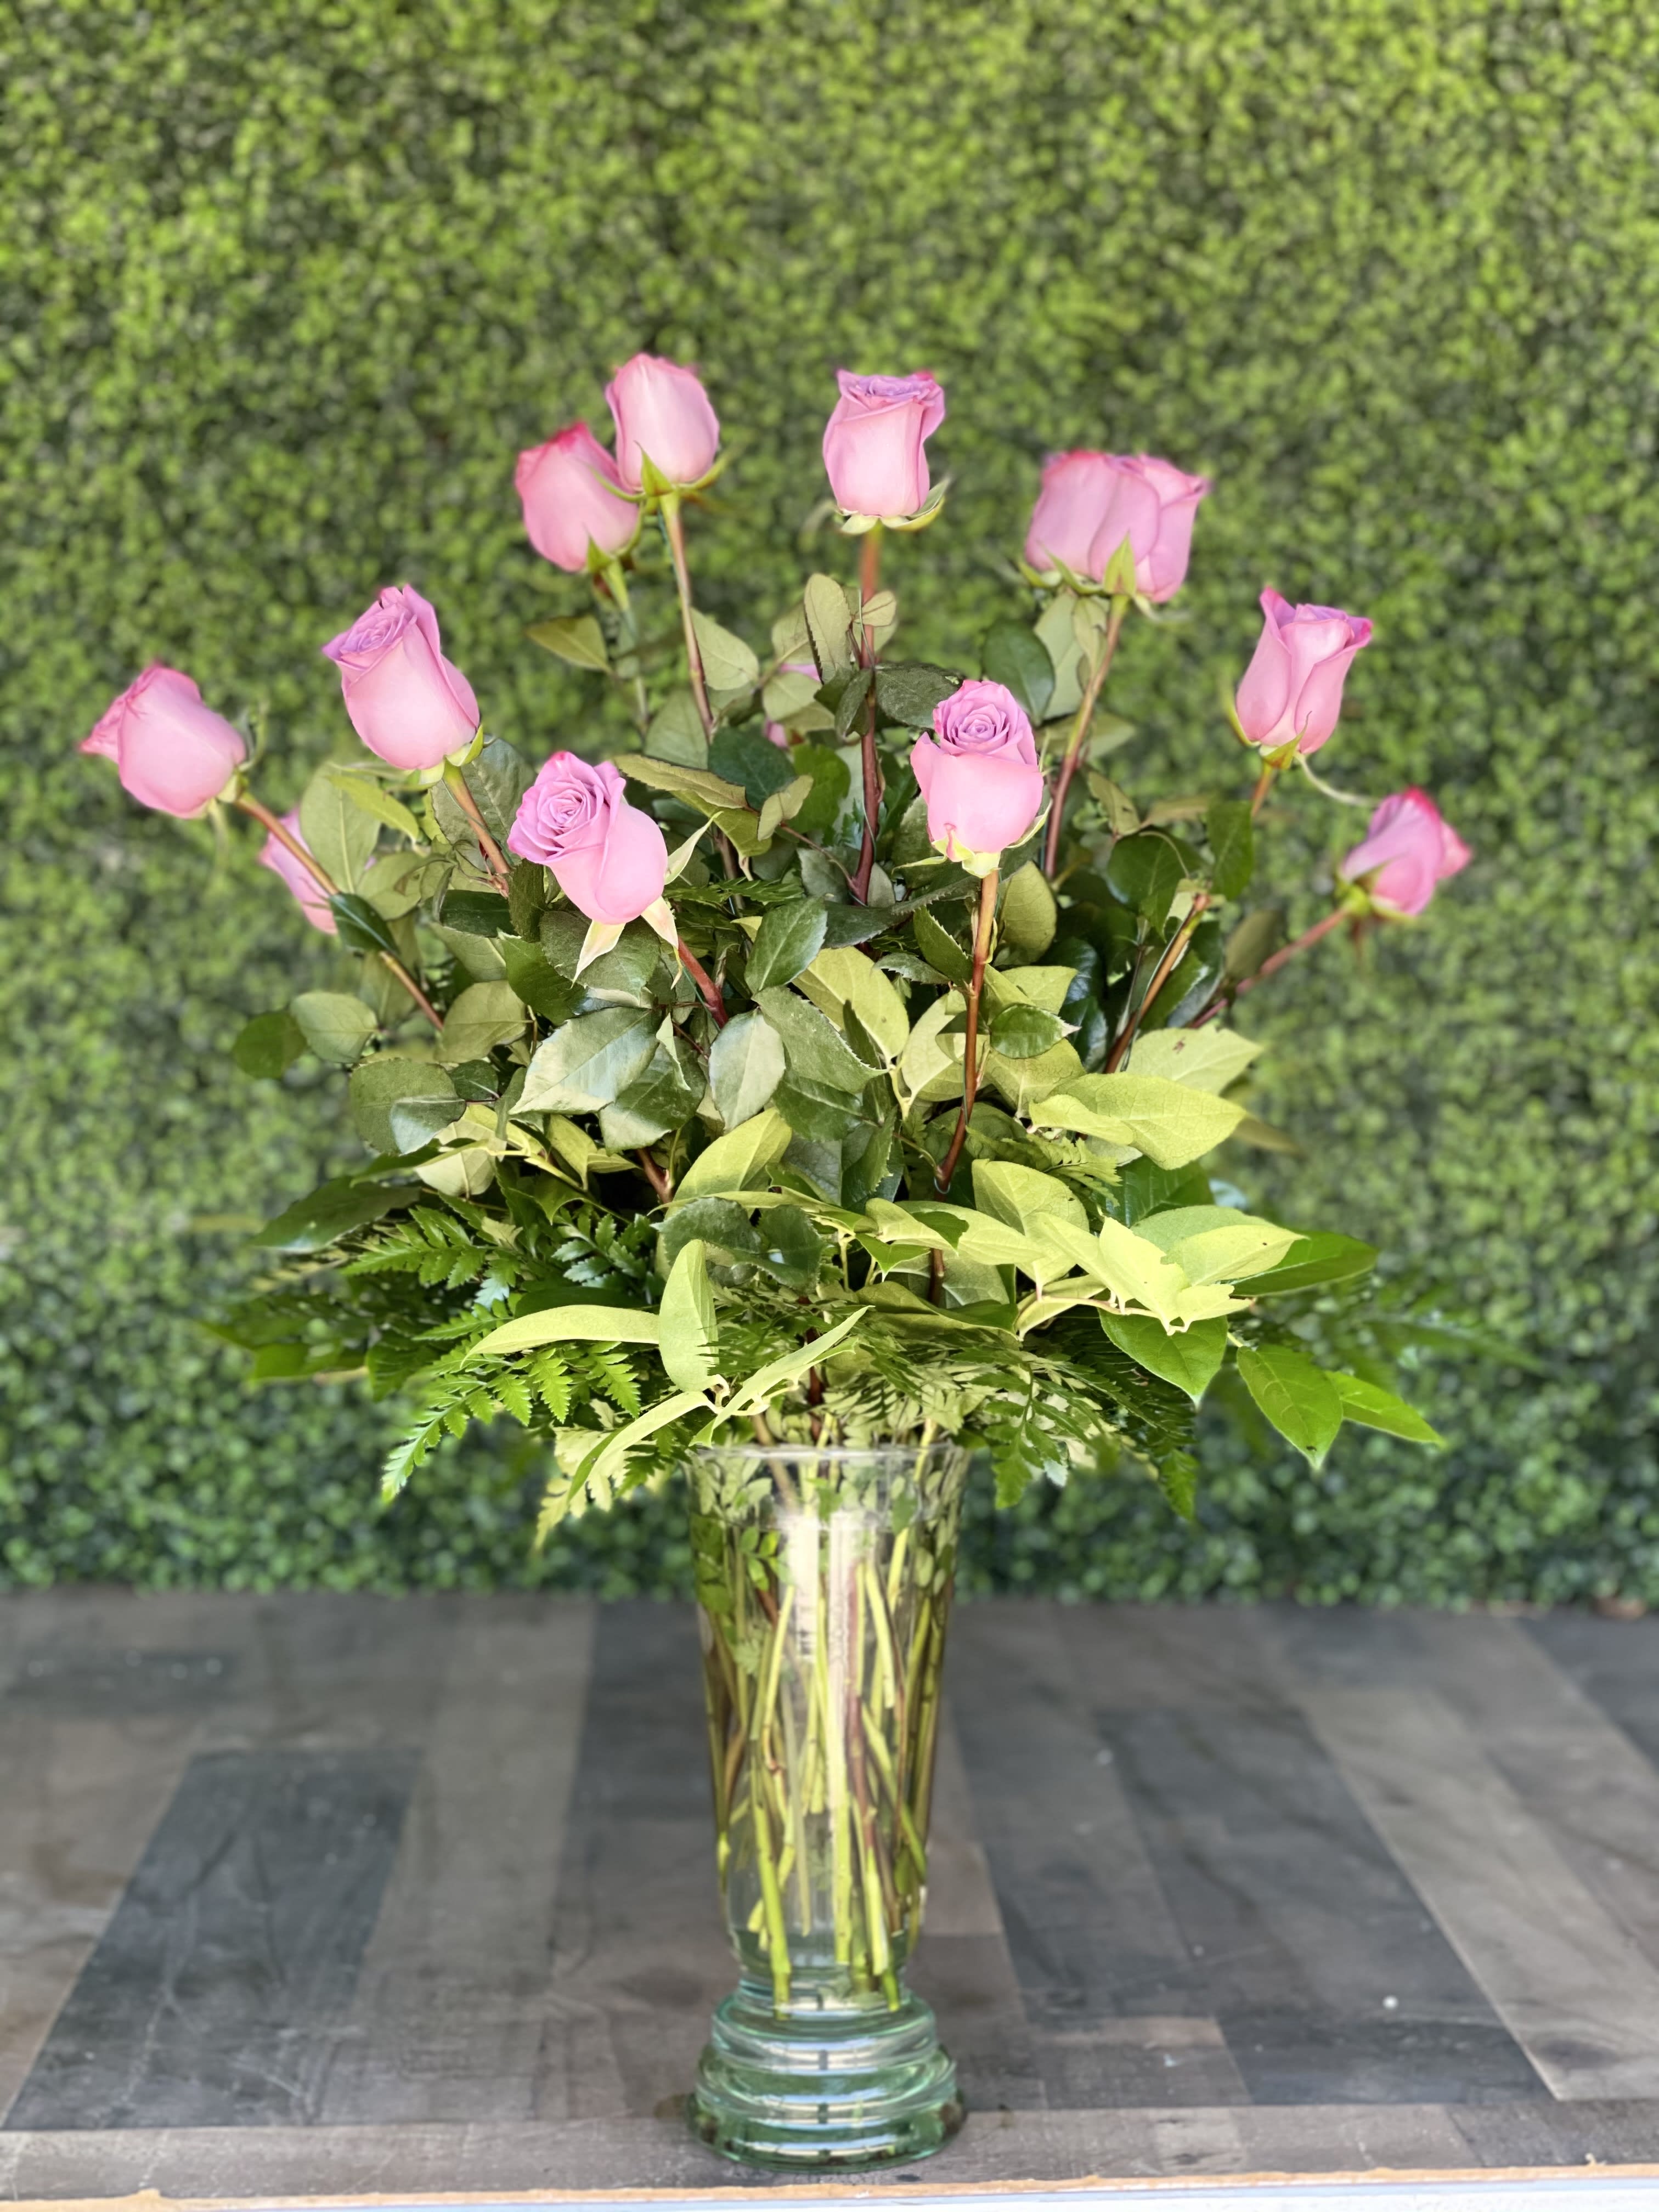 LAVENDER ROSES - A lavender rose arrangement designed in an updated glass vase with greens